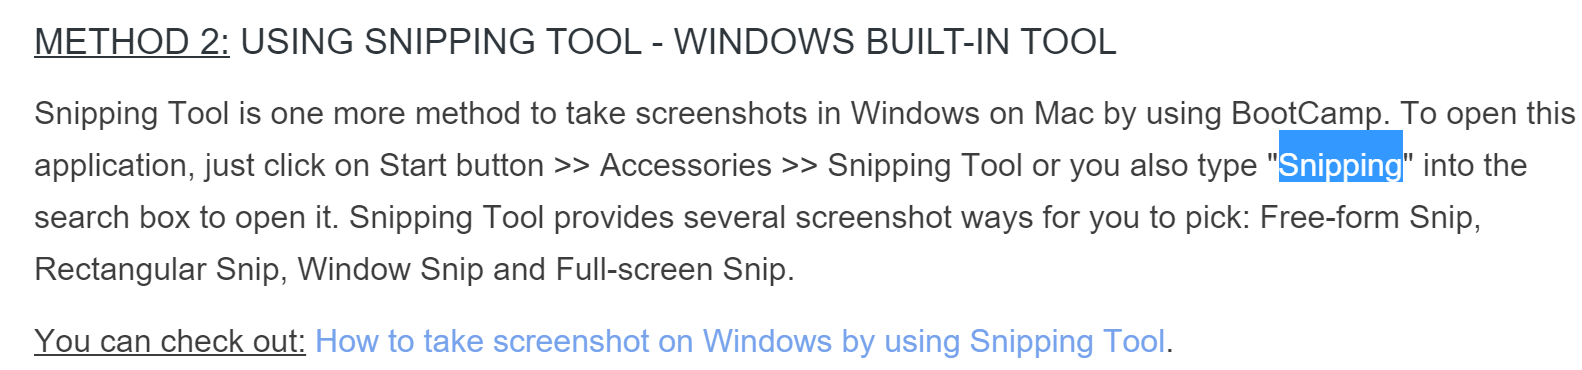 screenshot windows on Macbook 